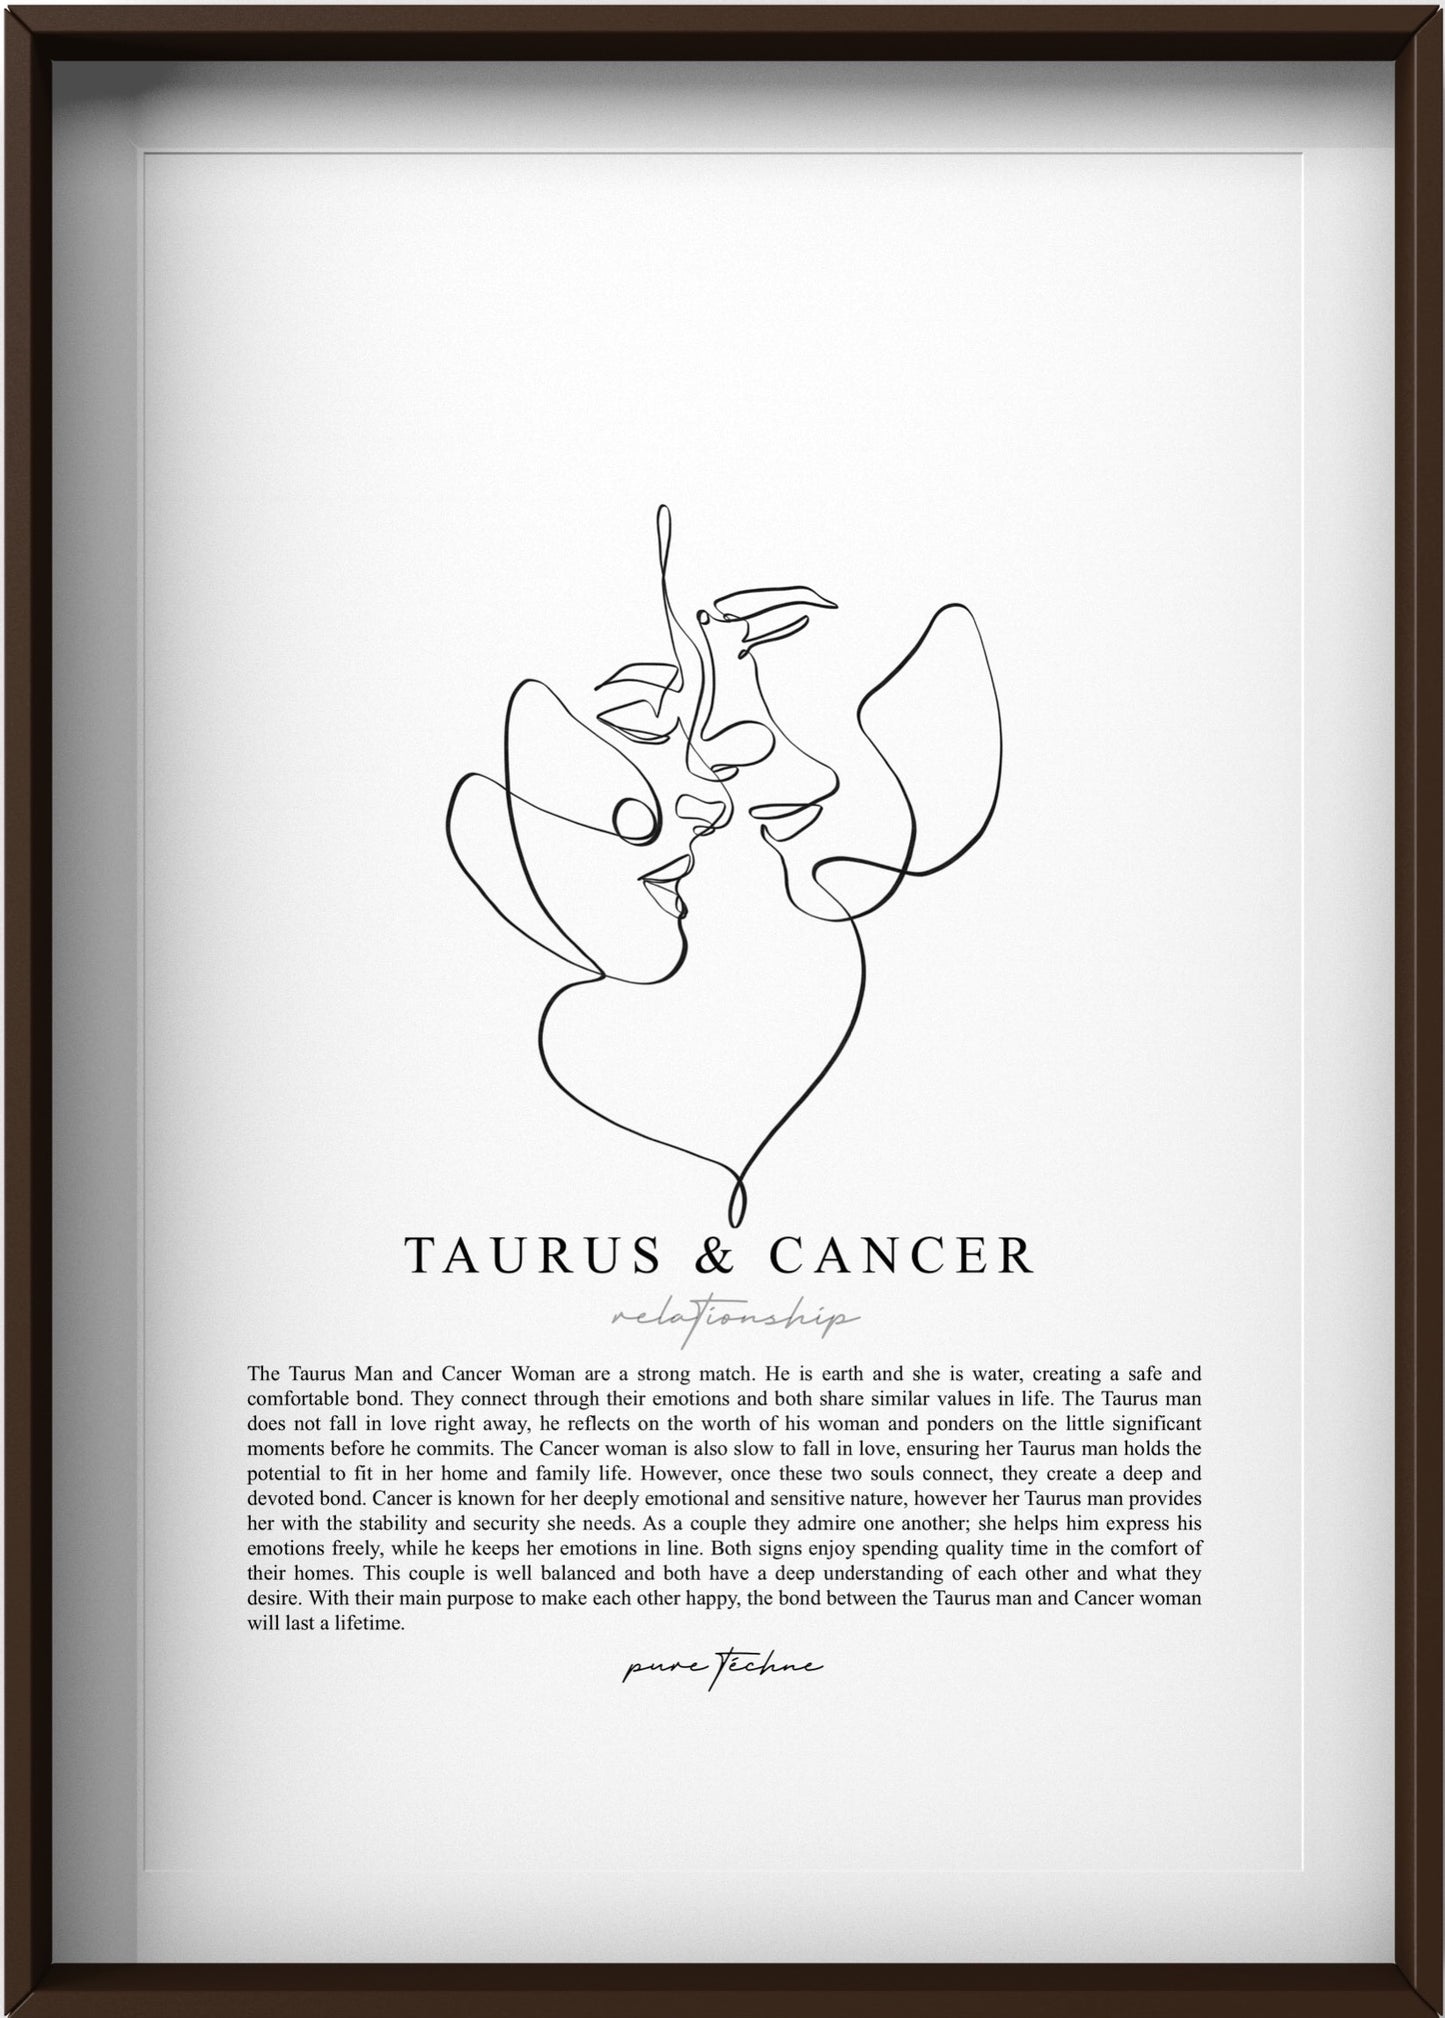 Taurus Man & Cancer Woman